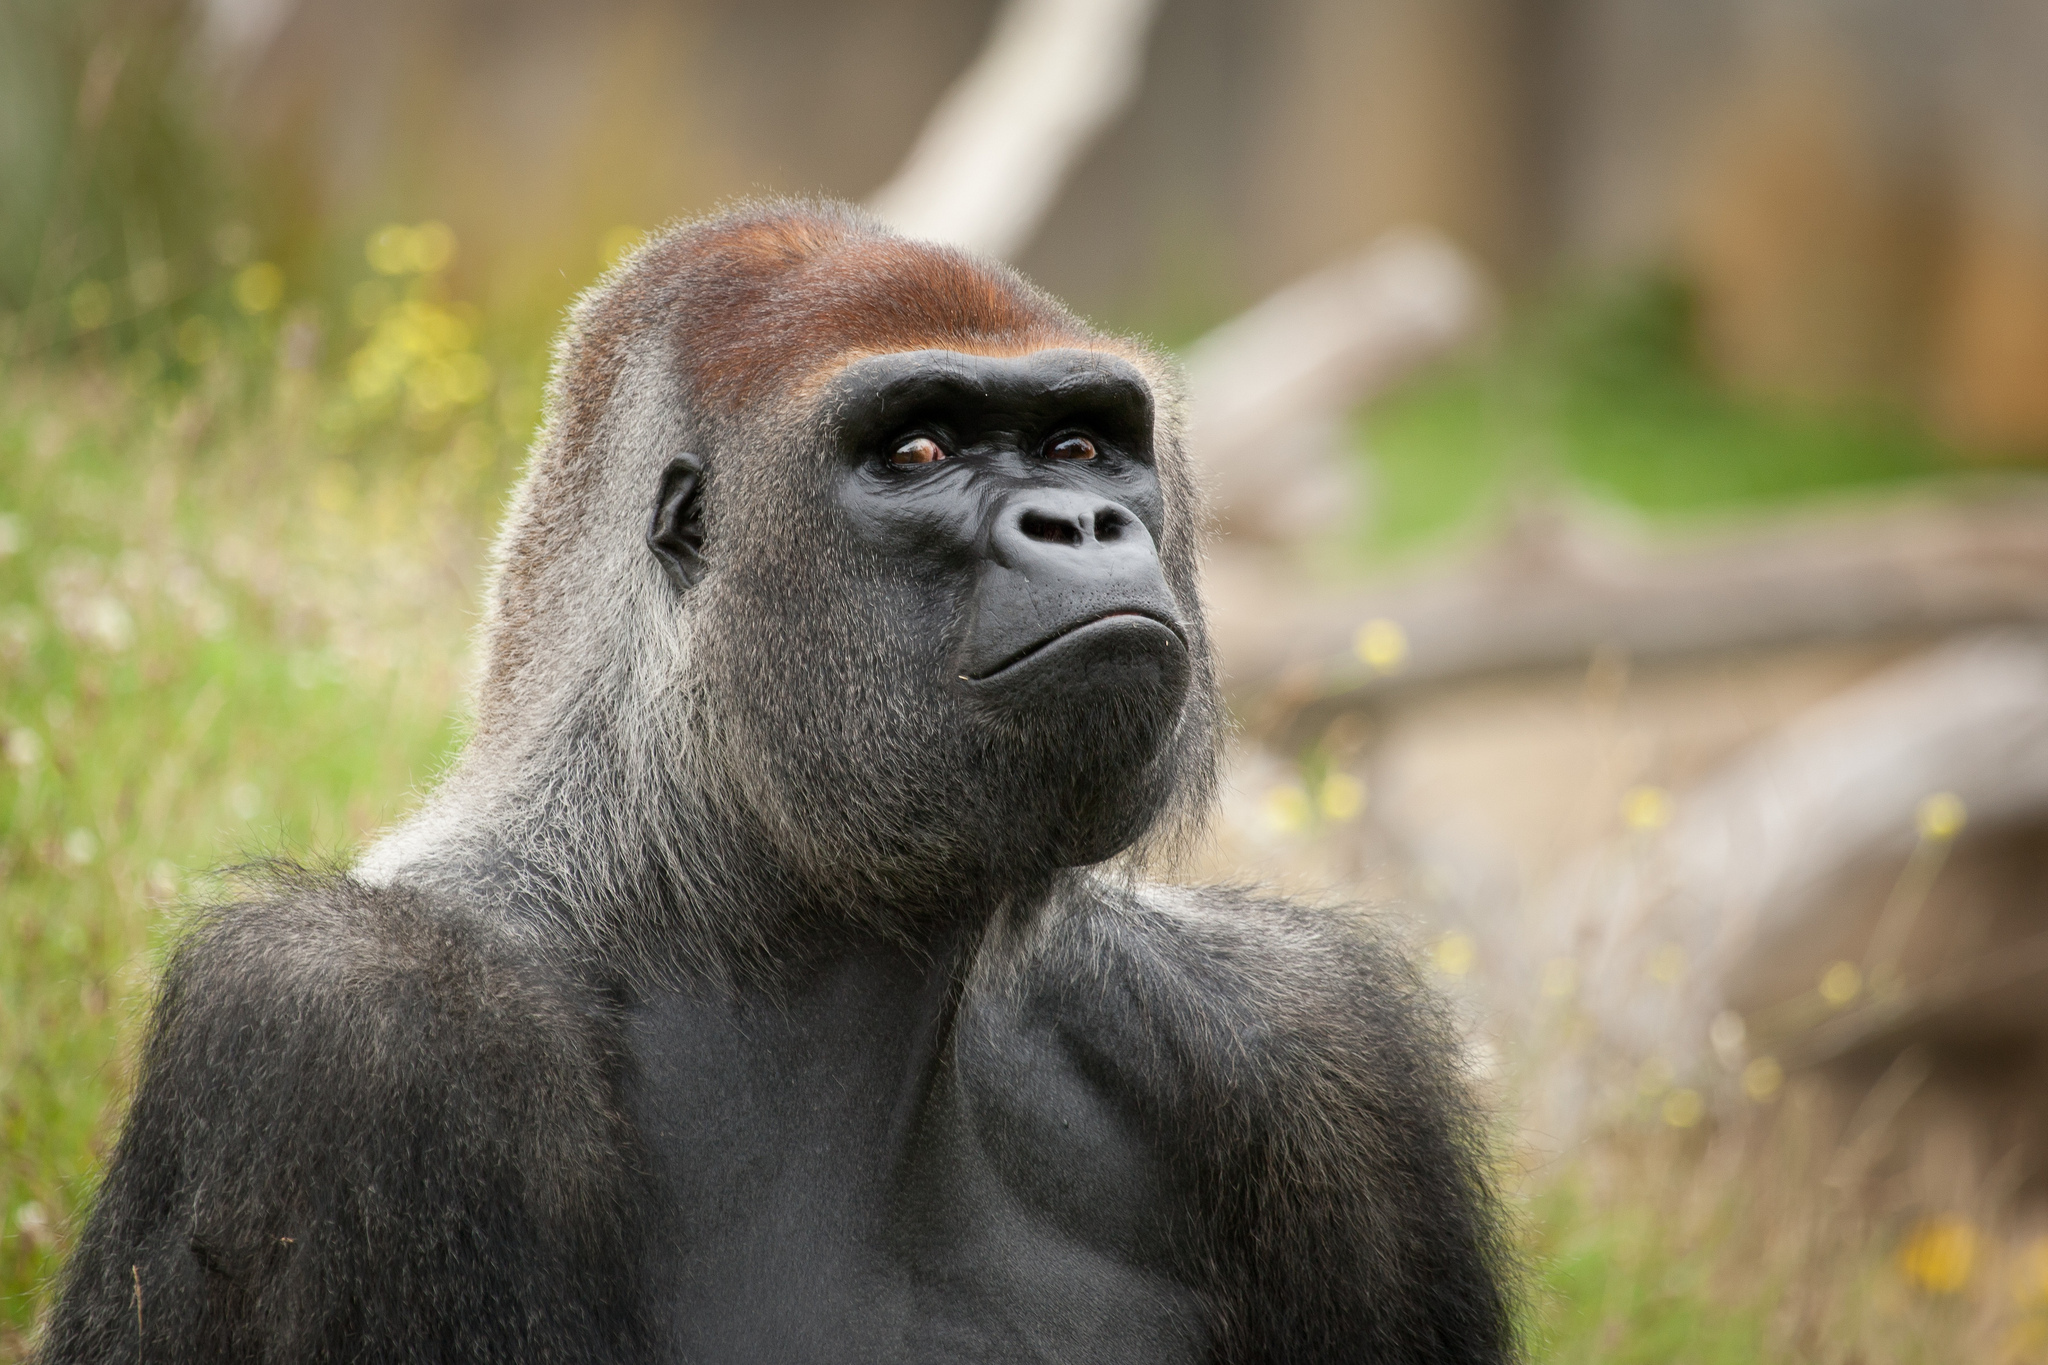 Wallpaper Gorilla Monkey Primate Face Eyes Animals